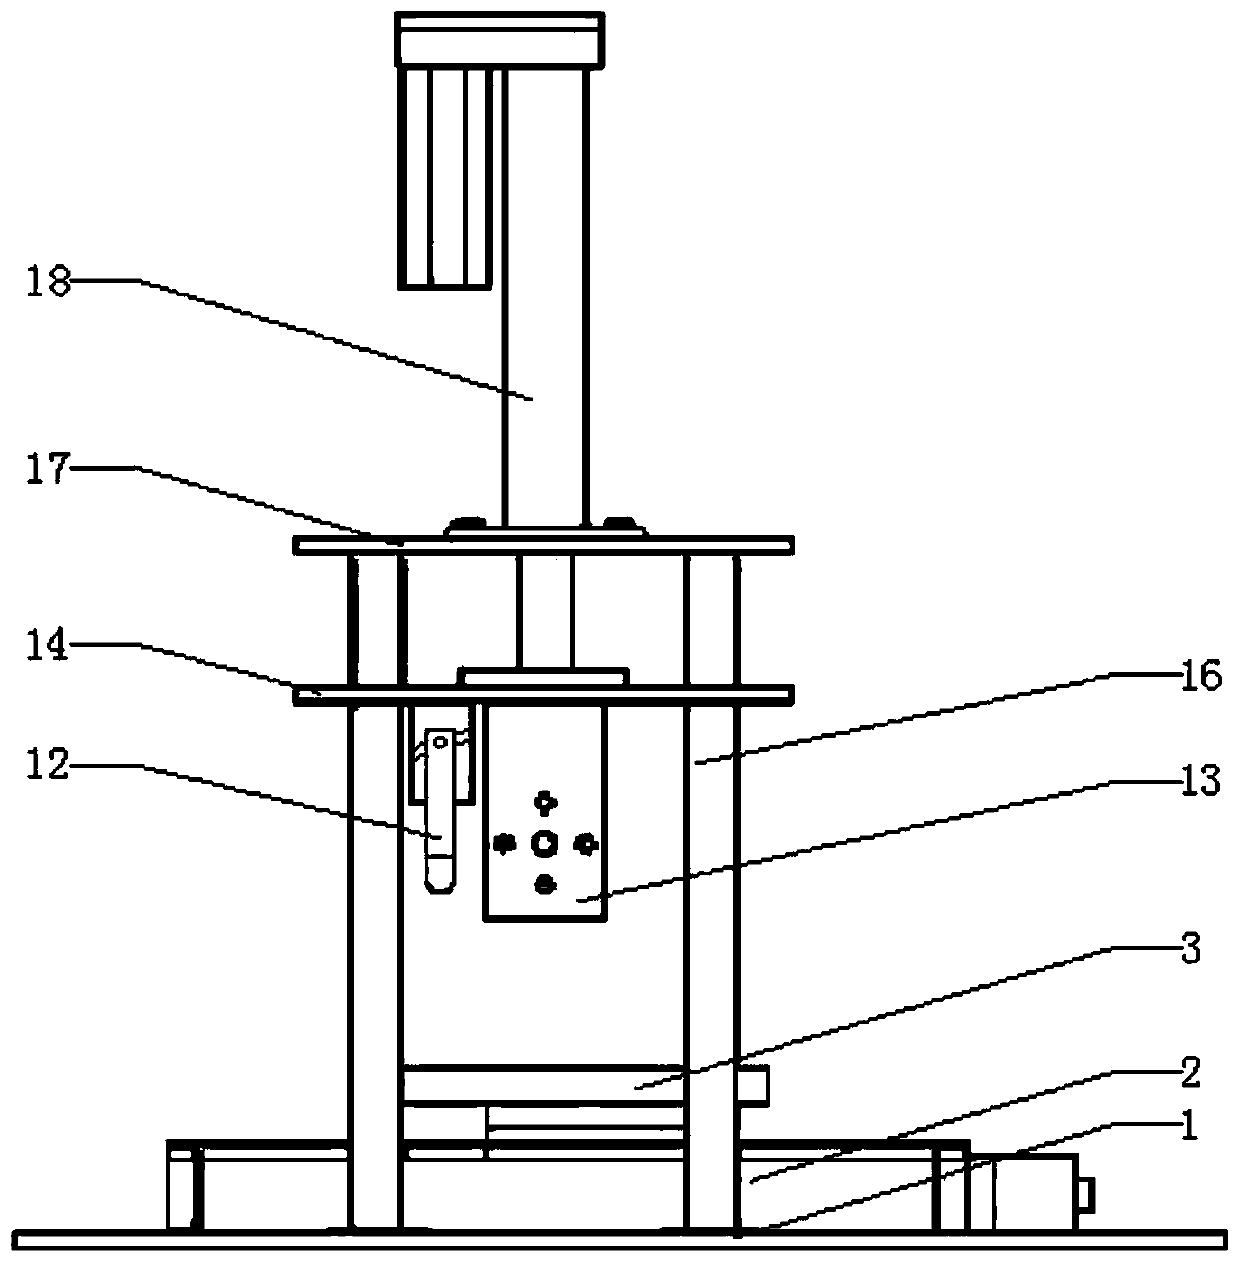 Composite nanoimprint lithography machine and working method